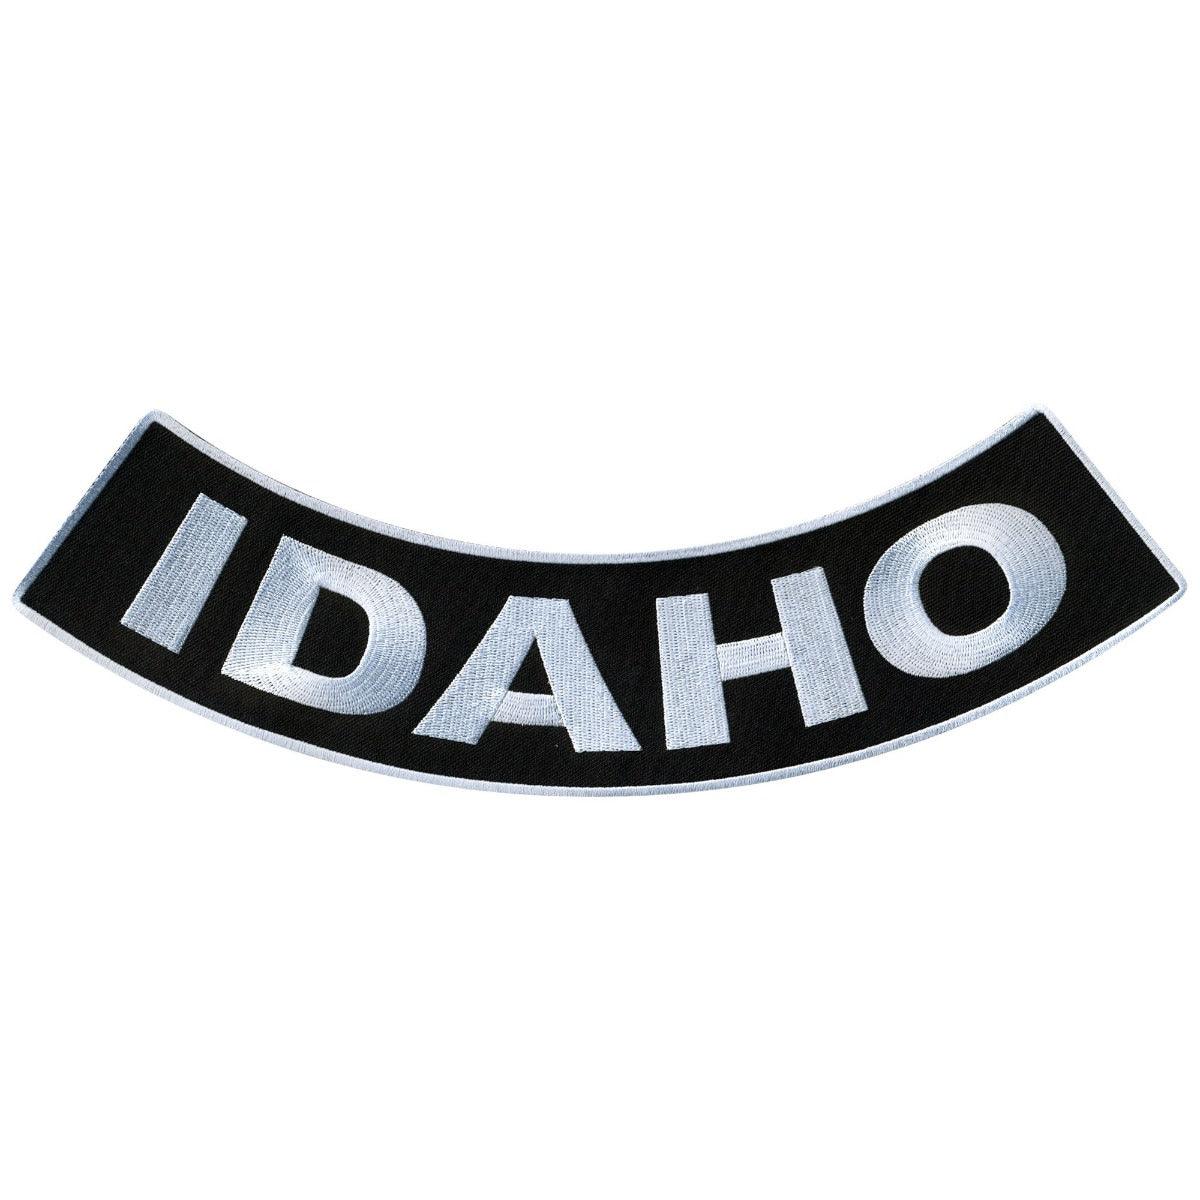 Hot Leathers Idaho 12” X 3” Bottom Rocker Patch - American Legend Rider